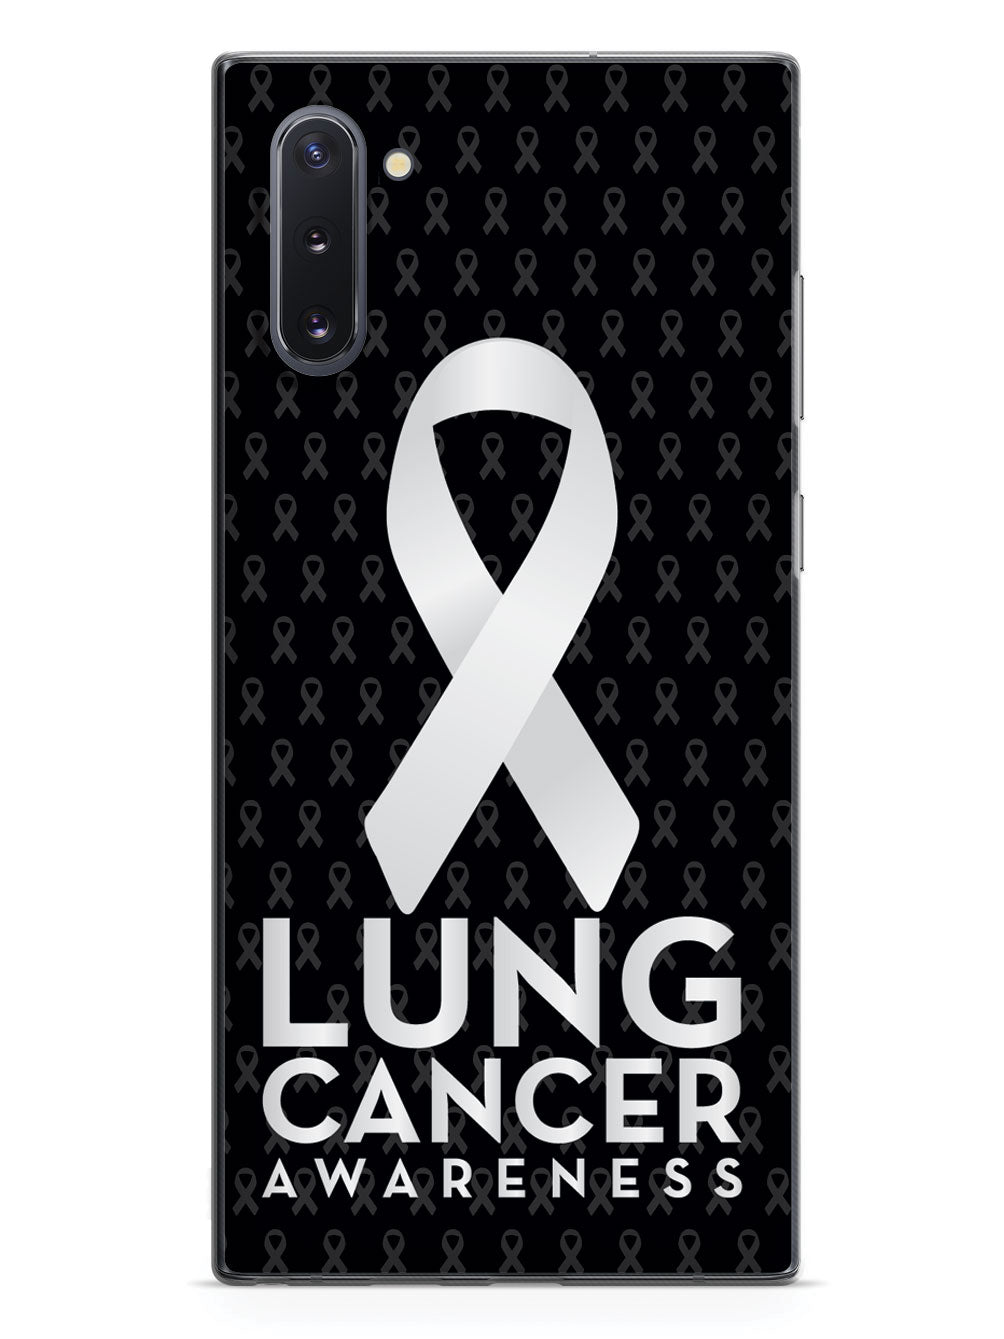 Lung Cancer Awareness - Black Case